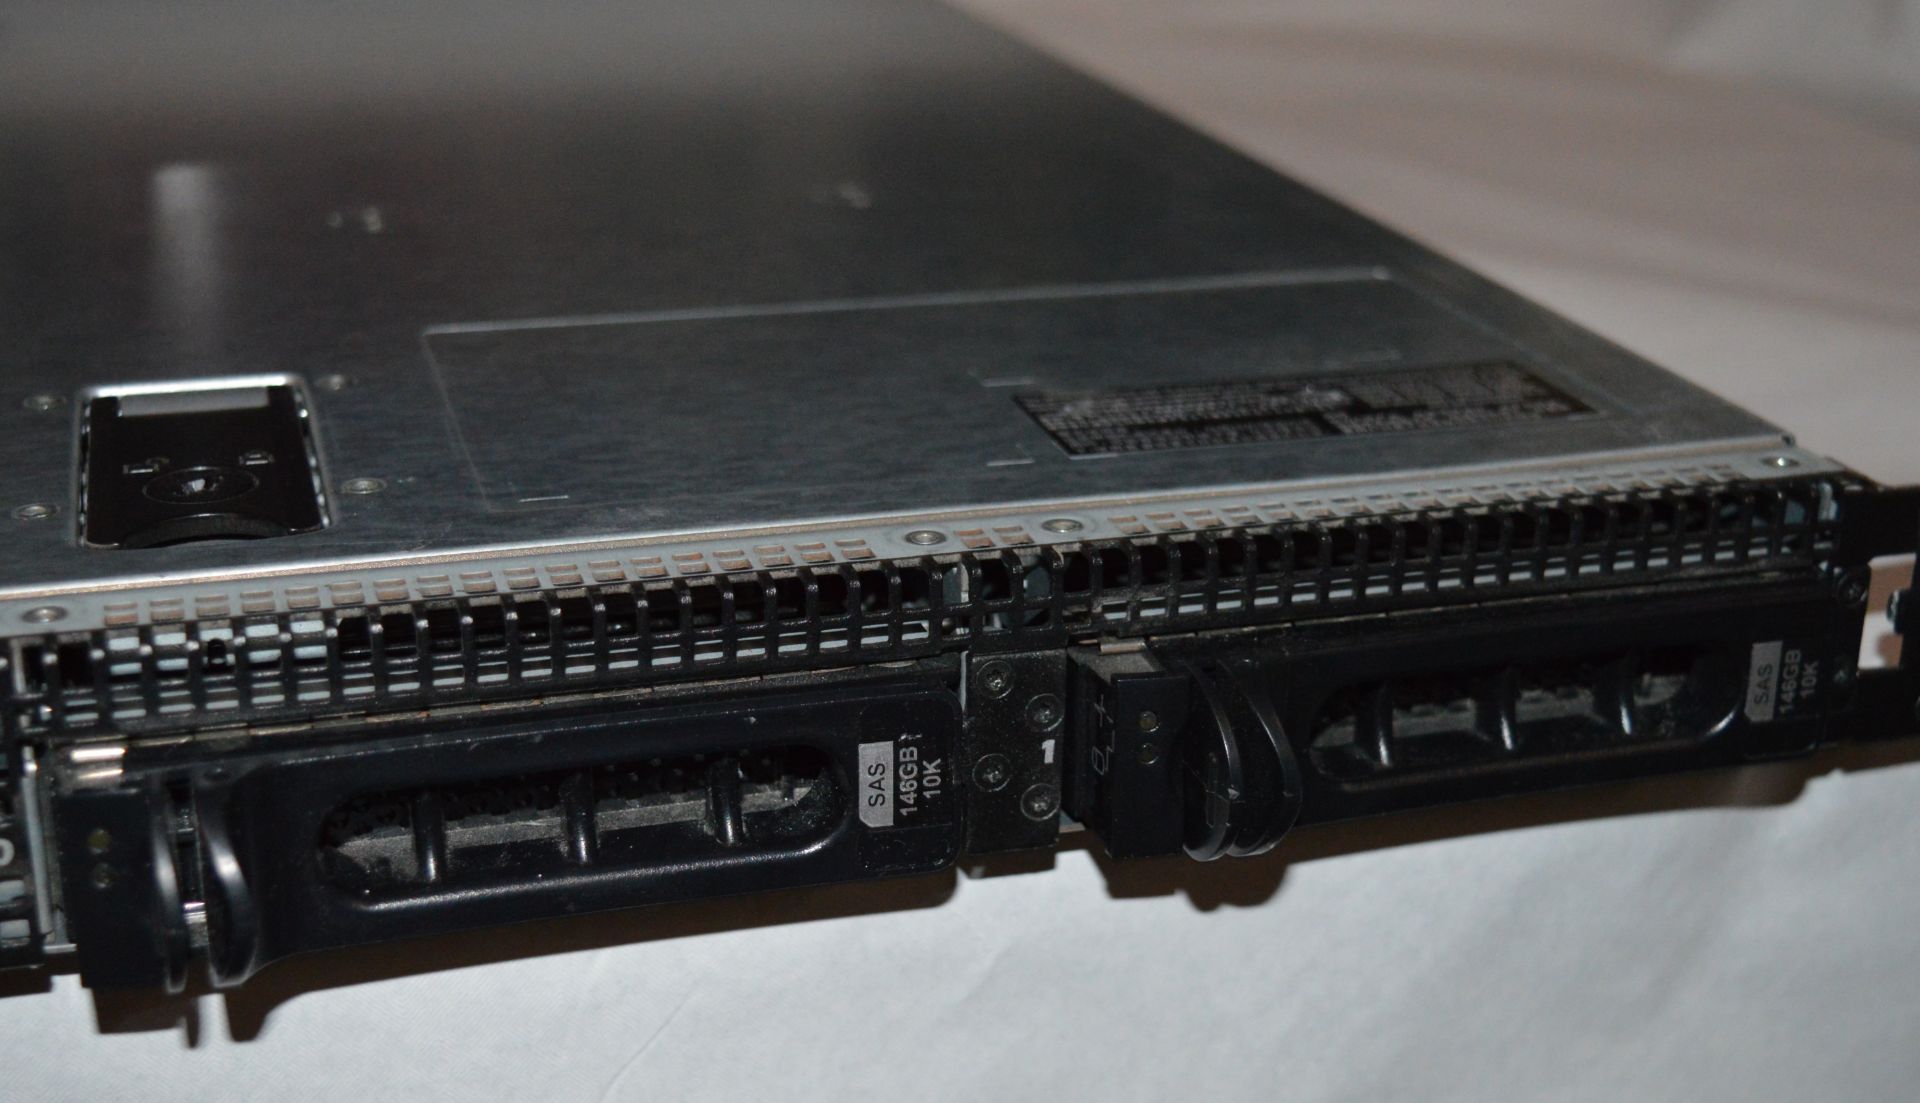 1 x Dell Poweredge 1950 1U Rackmount File Server - 2ghz Intel Quad Core Processor - 4gb Ram - 2 x - Image 10 of 12